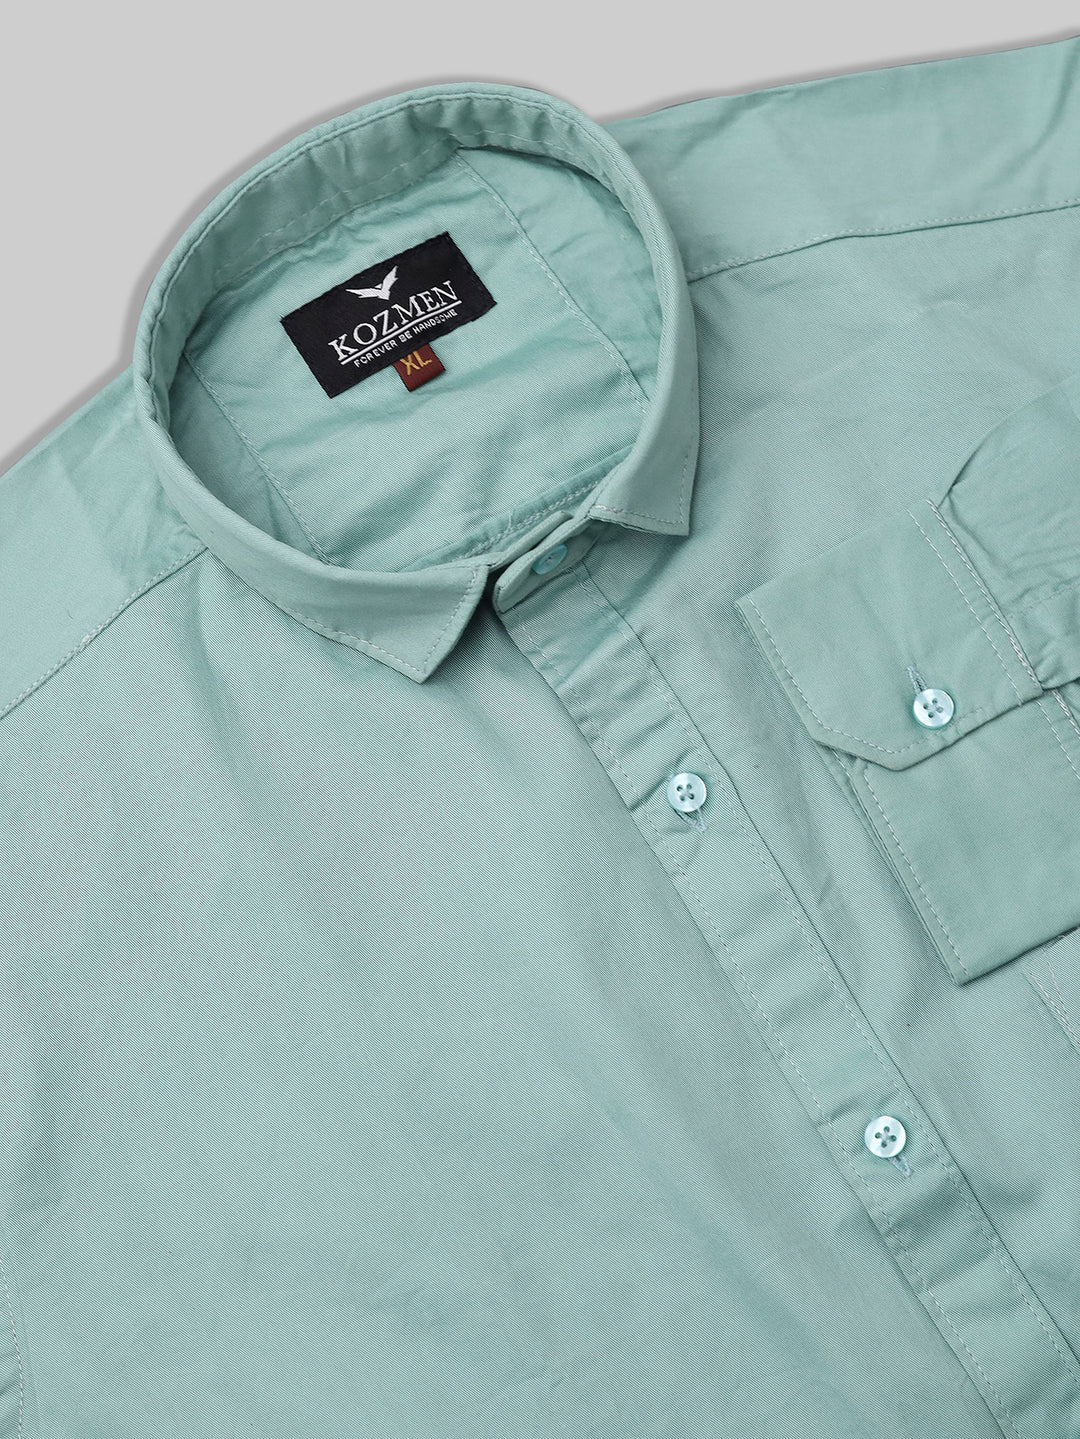 Kozmen Green Plain Pure Cotton Shirt, Casual, Full Sleeves at Rs